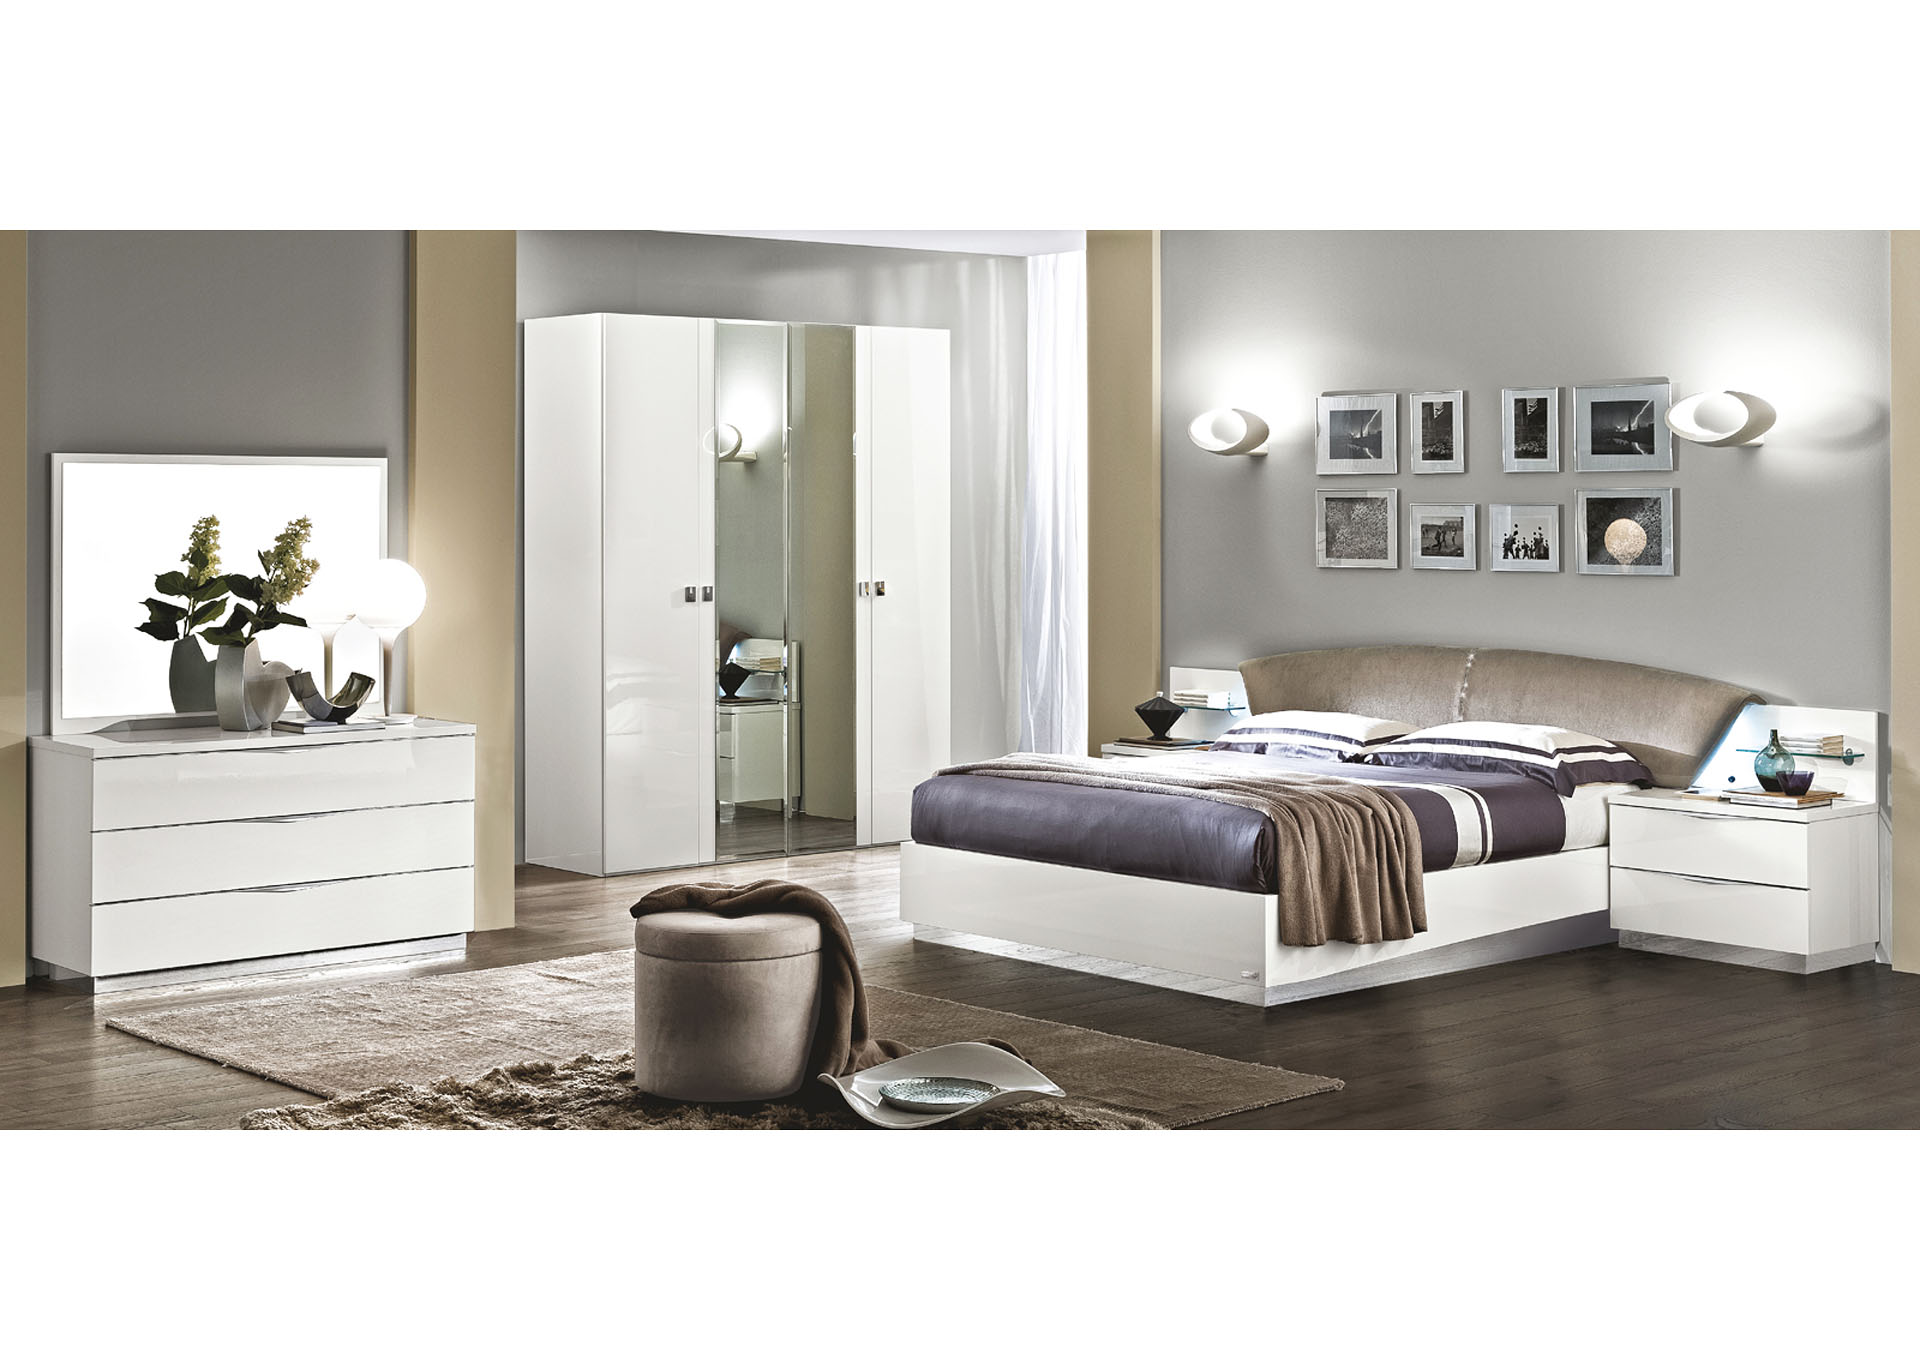 Onda Beige & White Mirror,ESF Wholesale Furniture